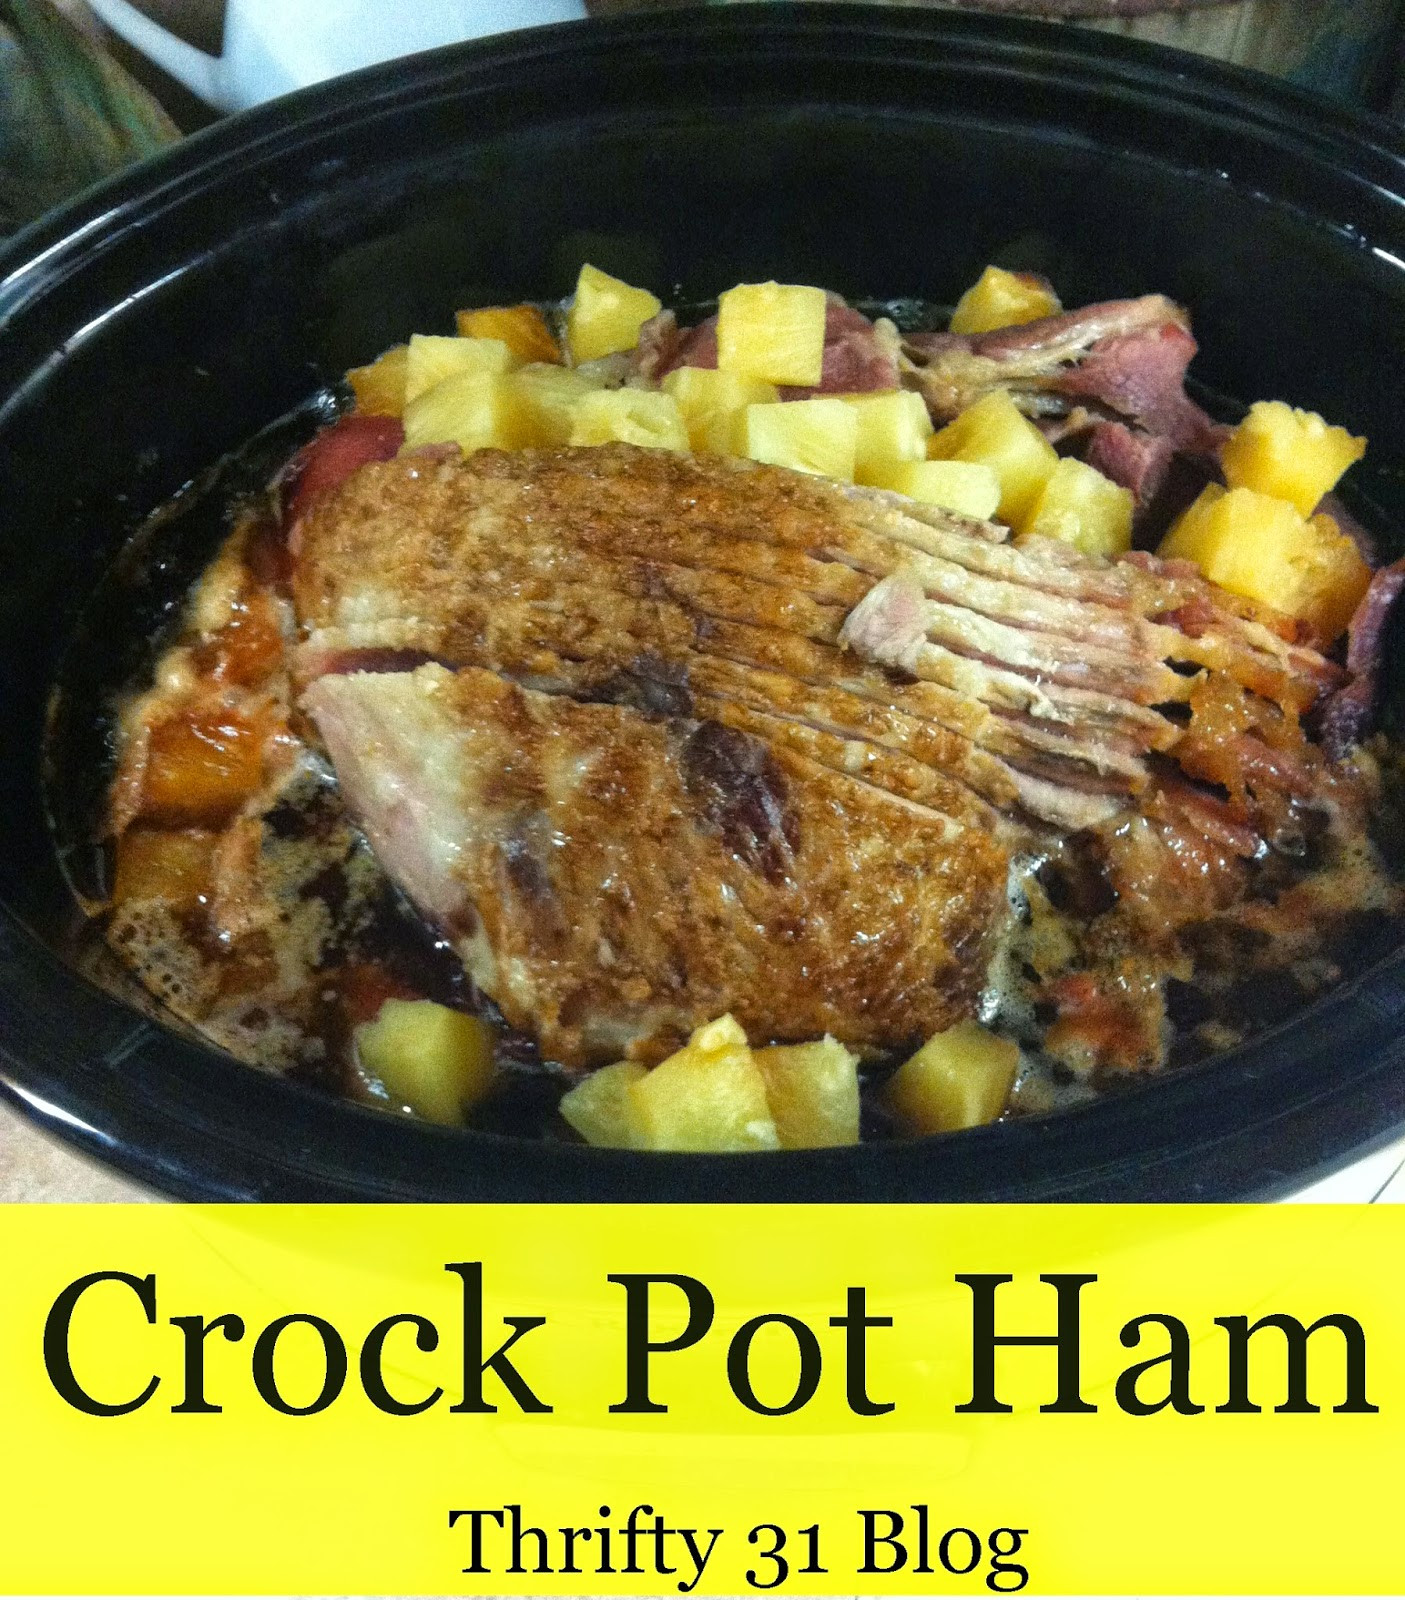 Crock Pot Easter Ham
 Thrifty 31 Blog Crock Pot Ham